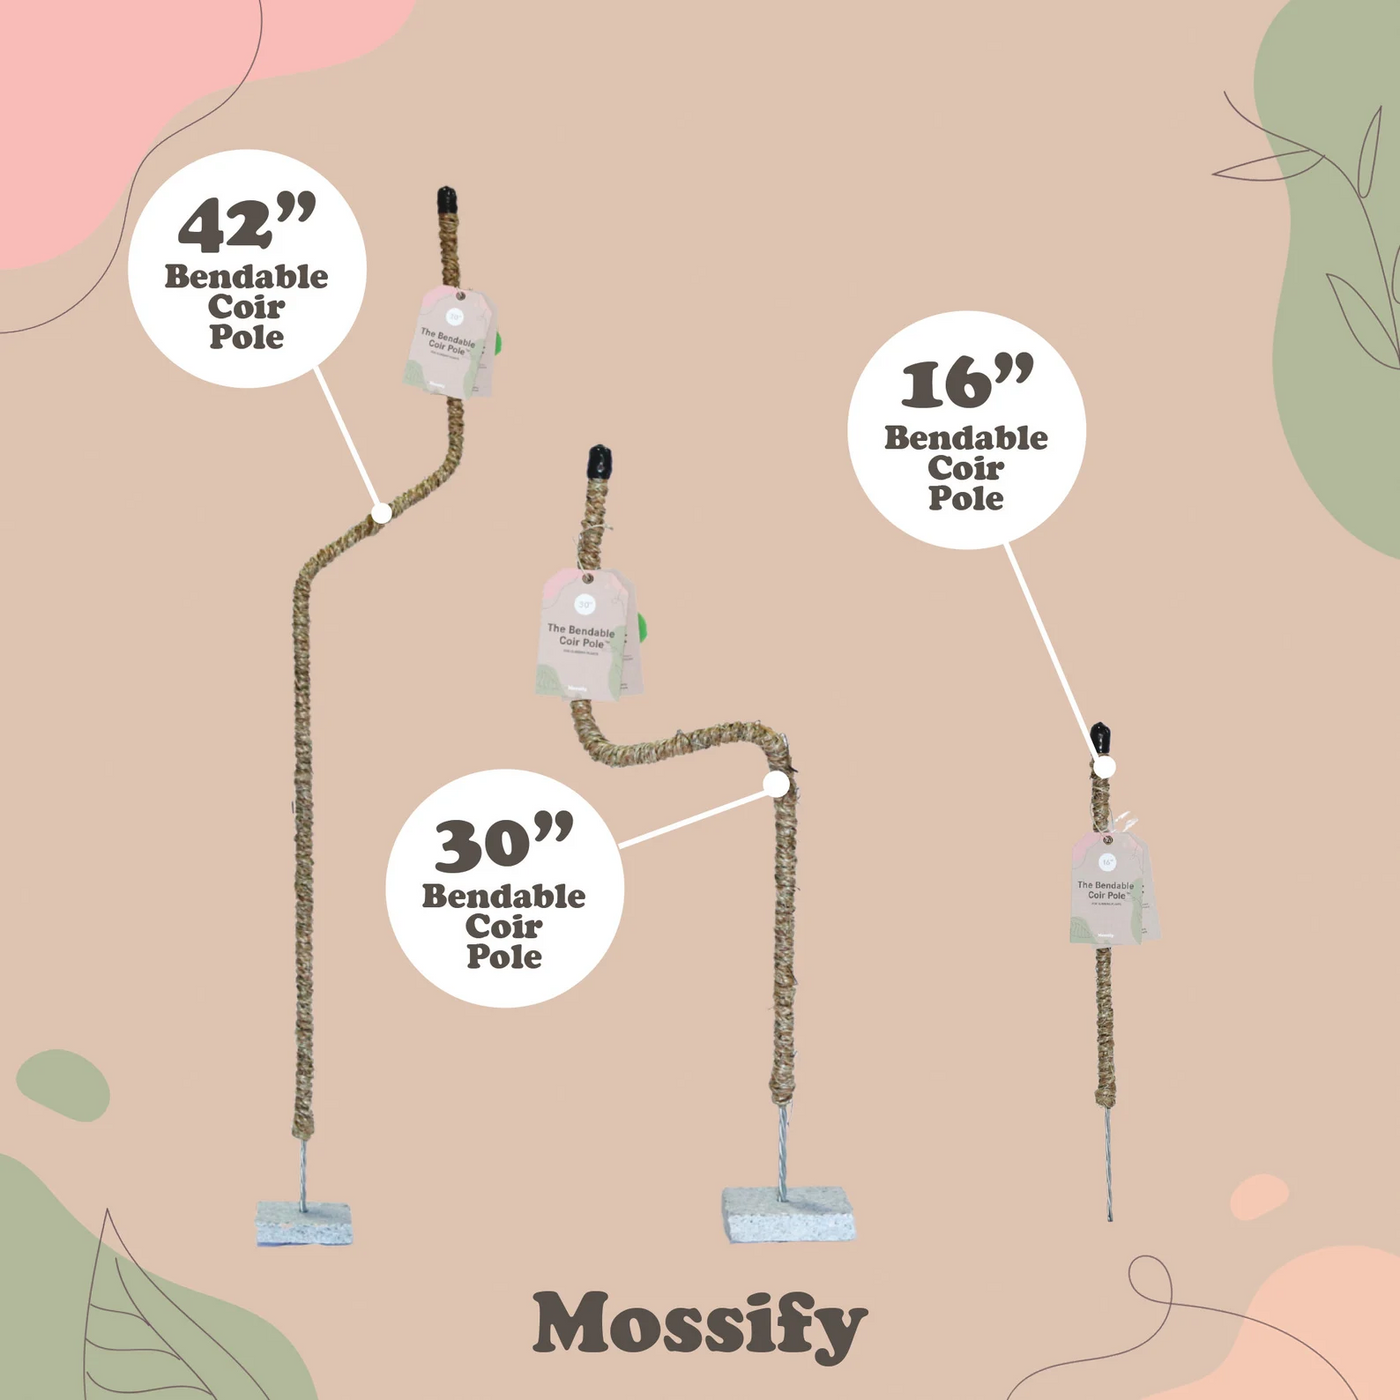 Mossify 42" Bendable Coir Pole